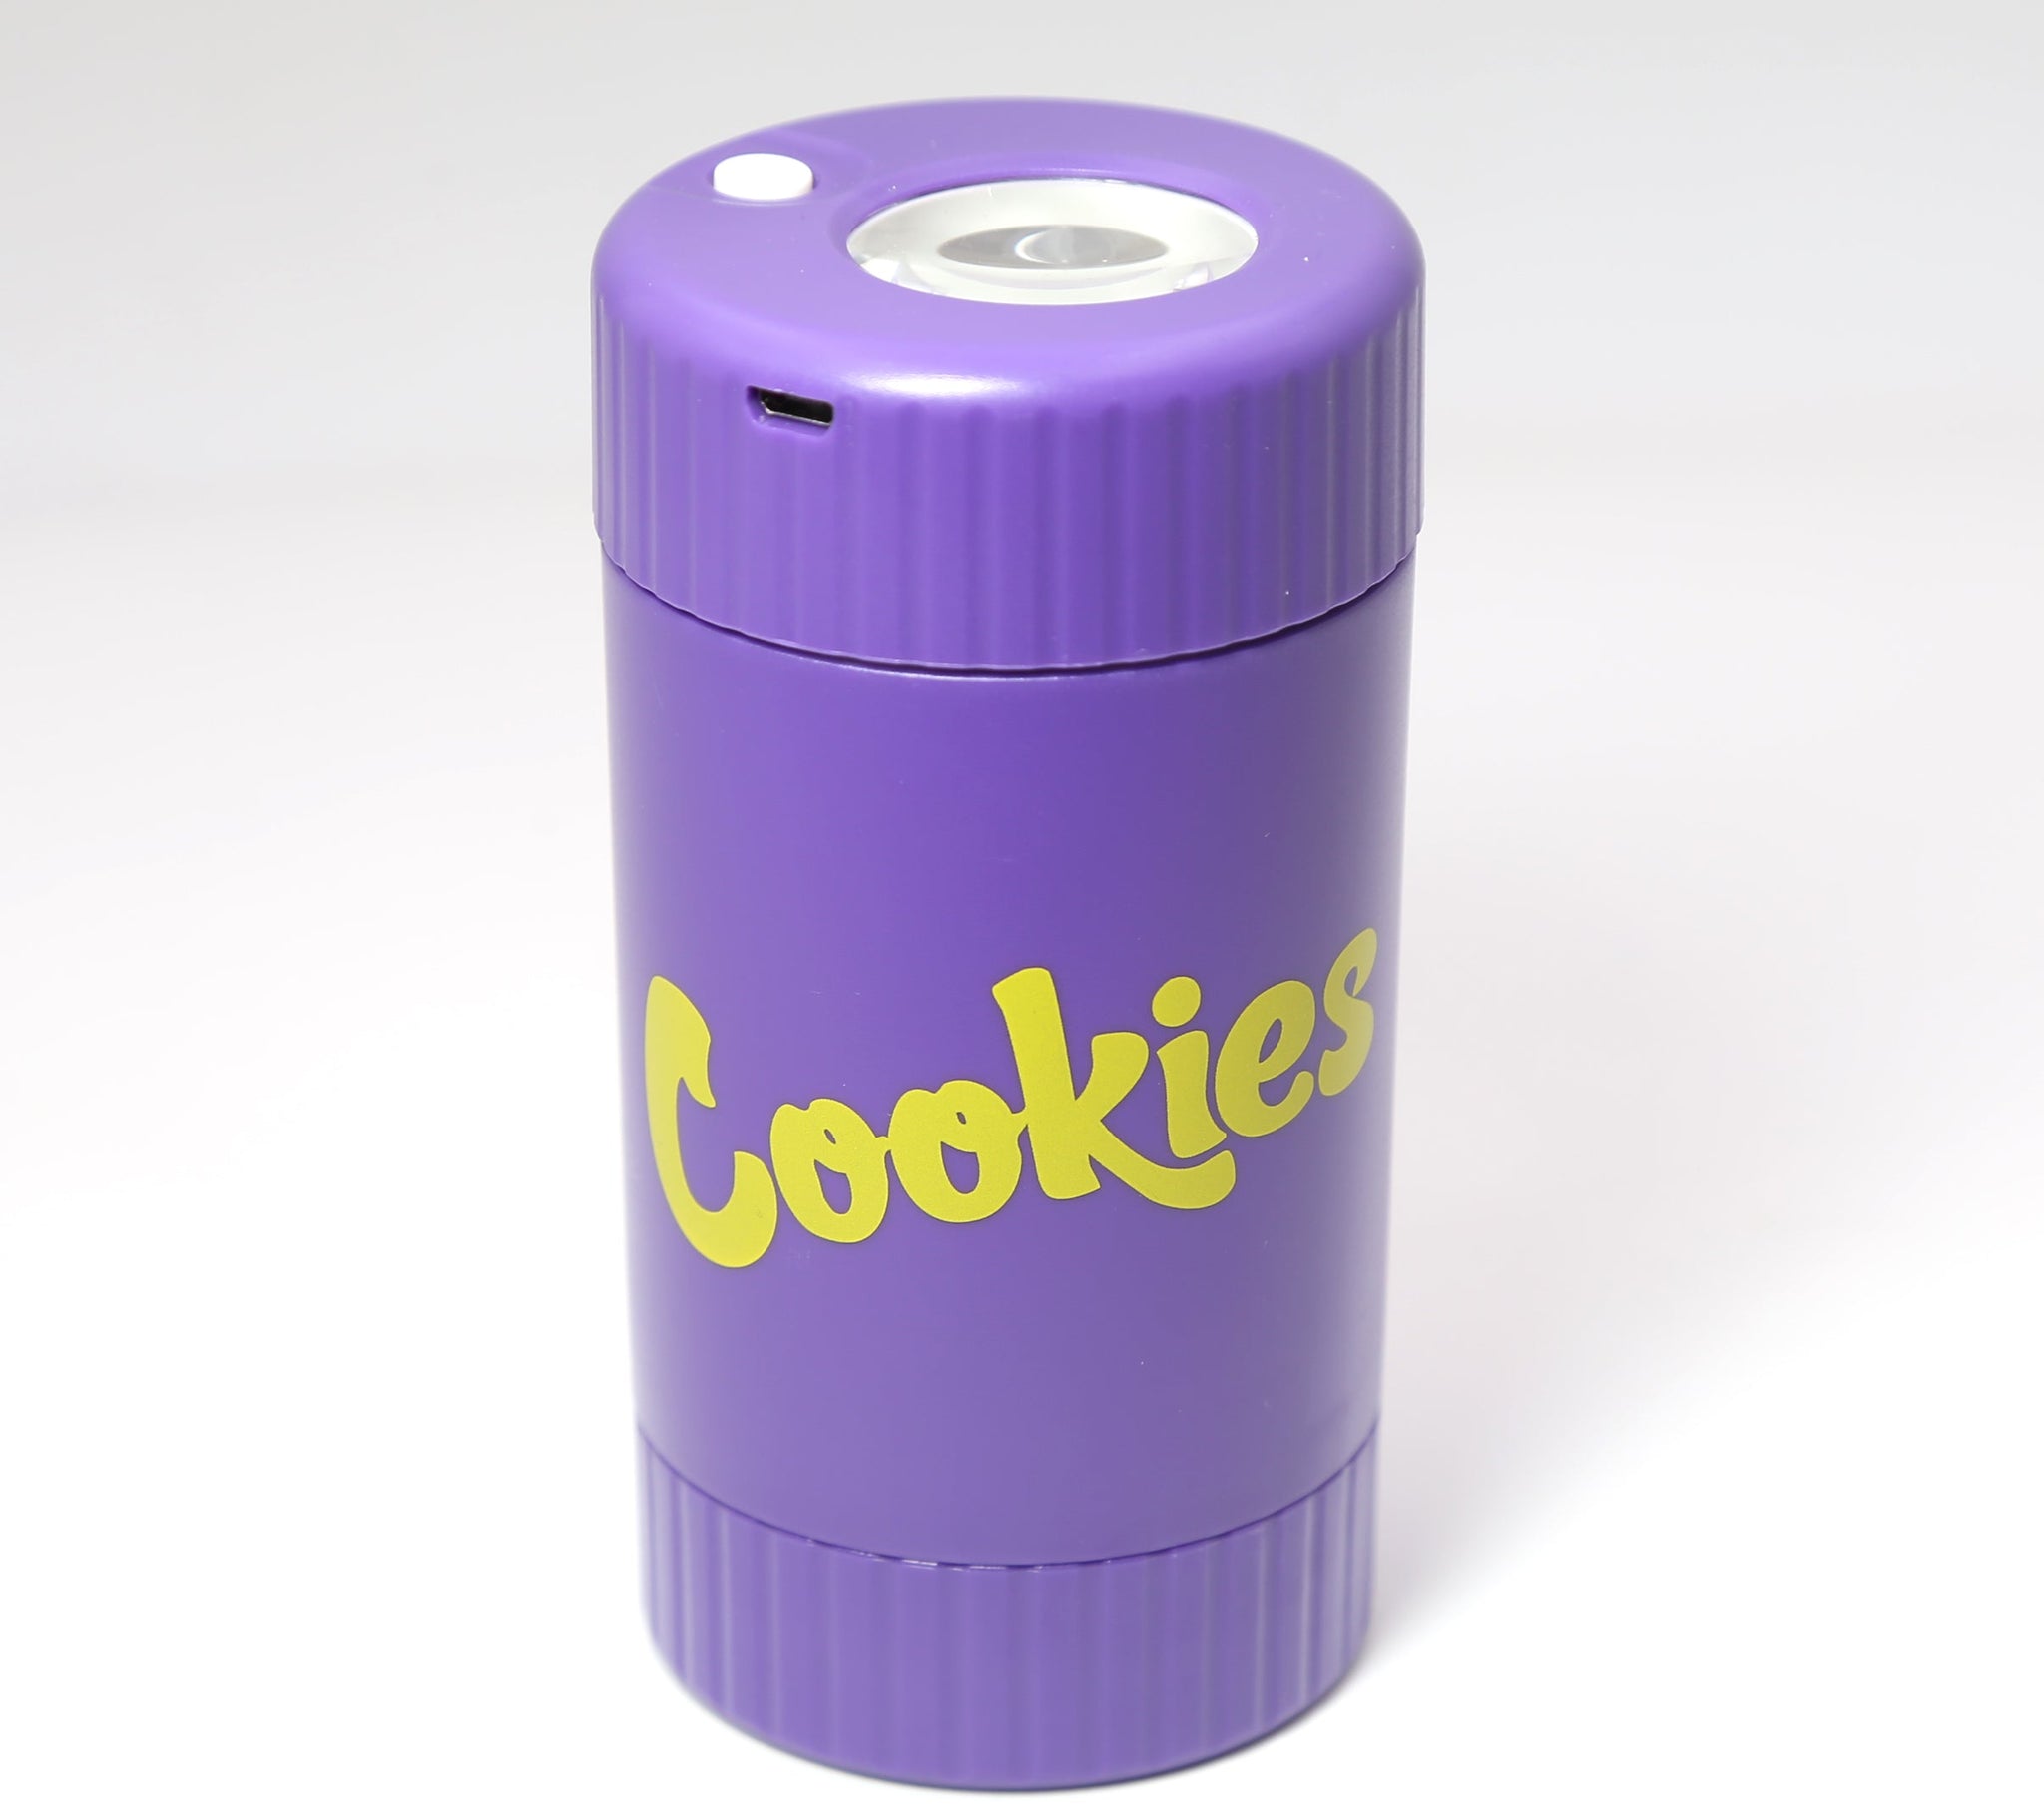 COOKIE JAR Miniature, Screw Cap Glass Jar With 12 Cookies – Badger's Bakery